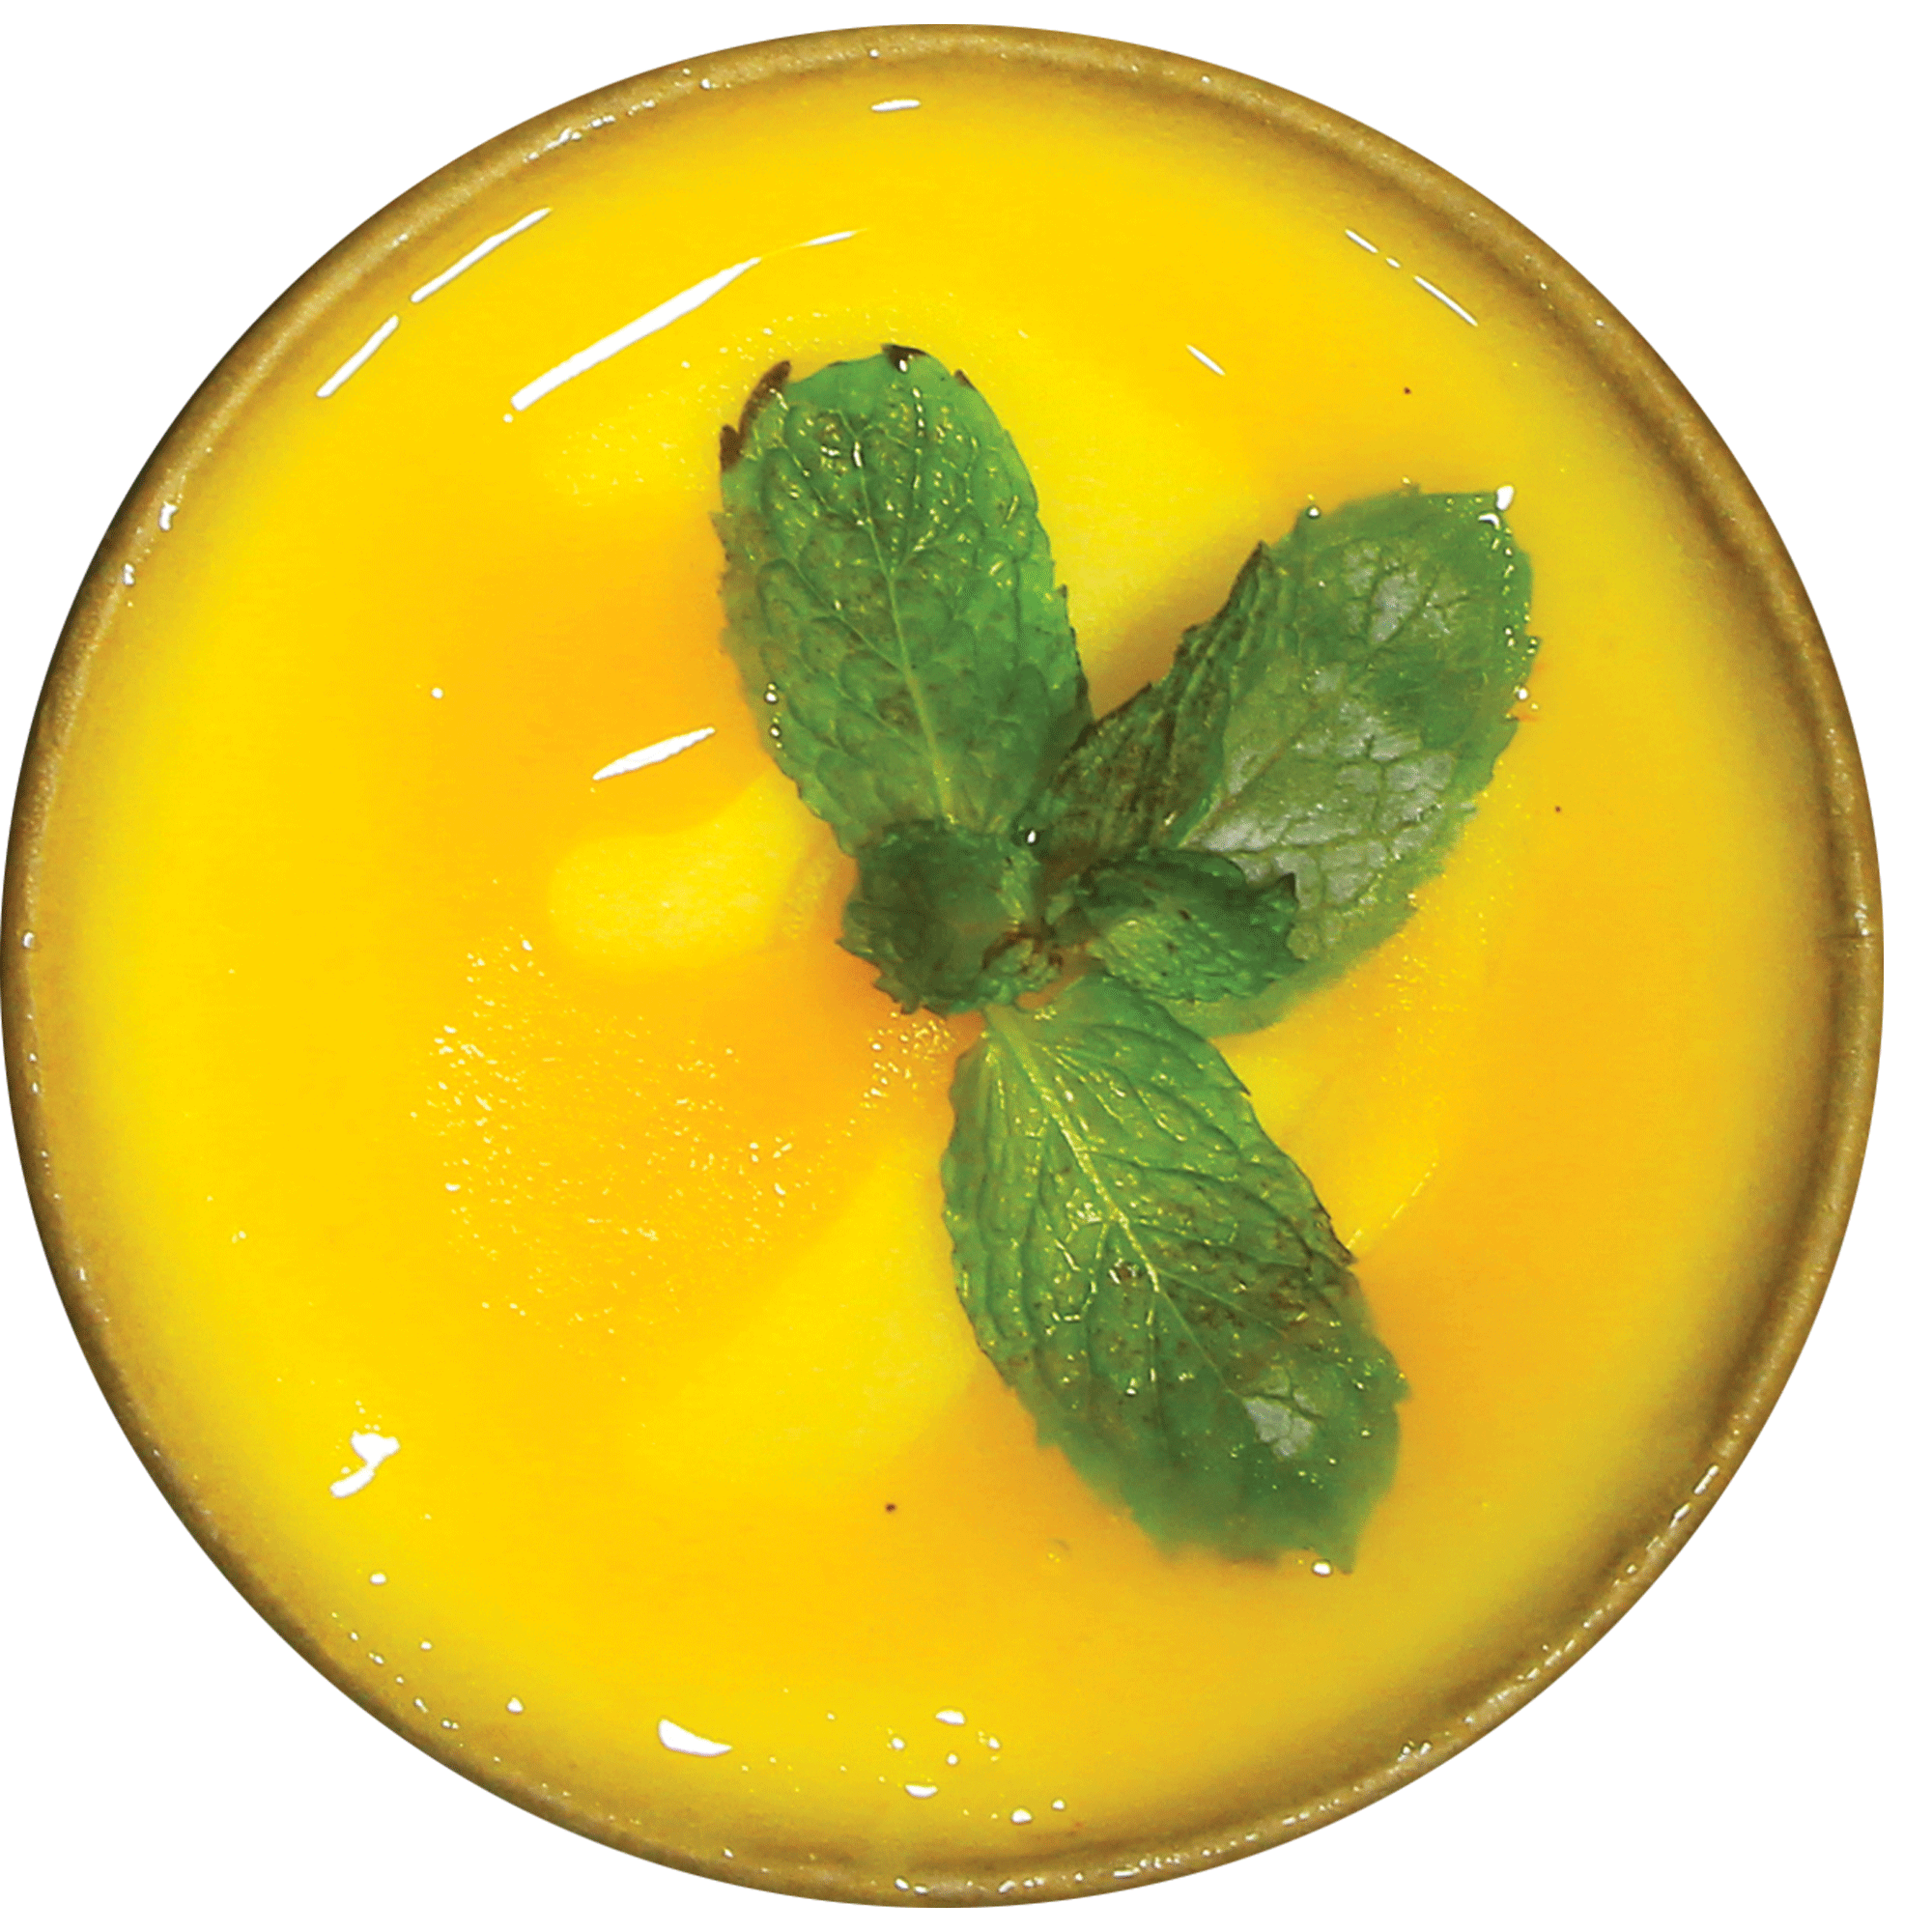 Ettore Gelato - Mango mint e passion fruit sorbet (gelato) cup / Each